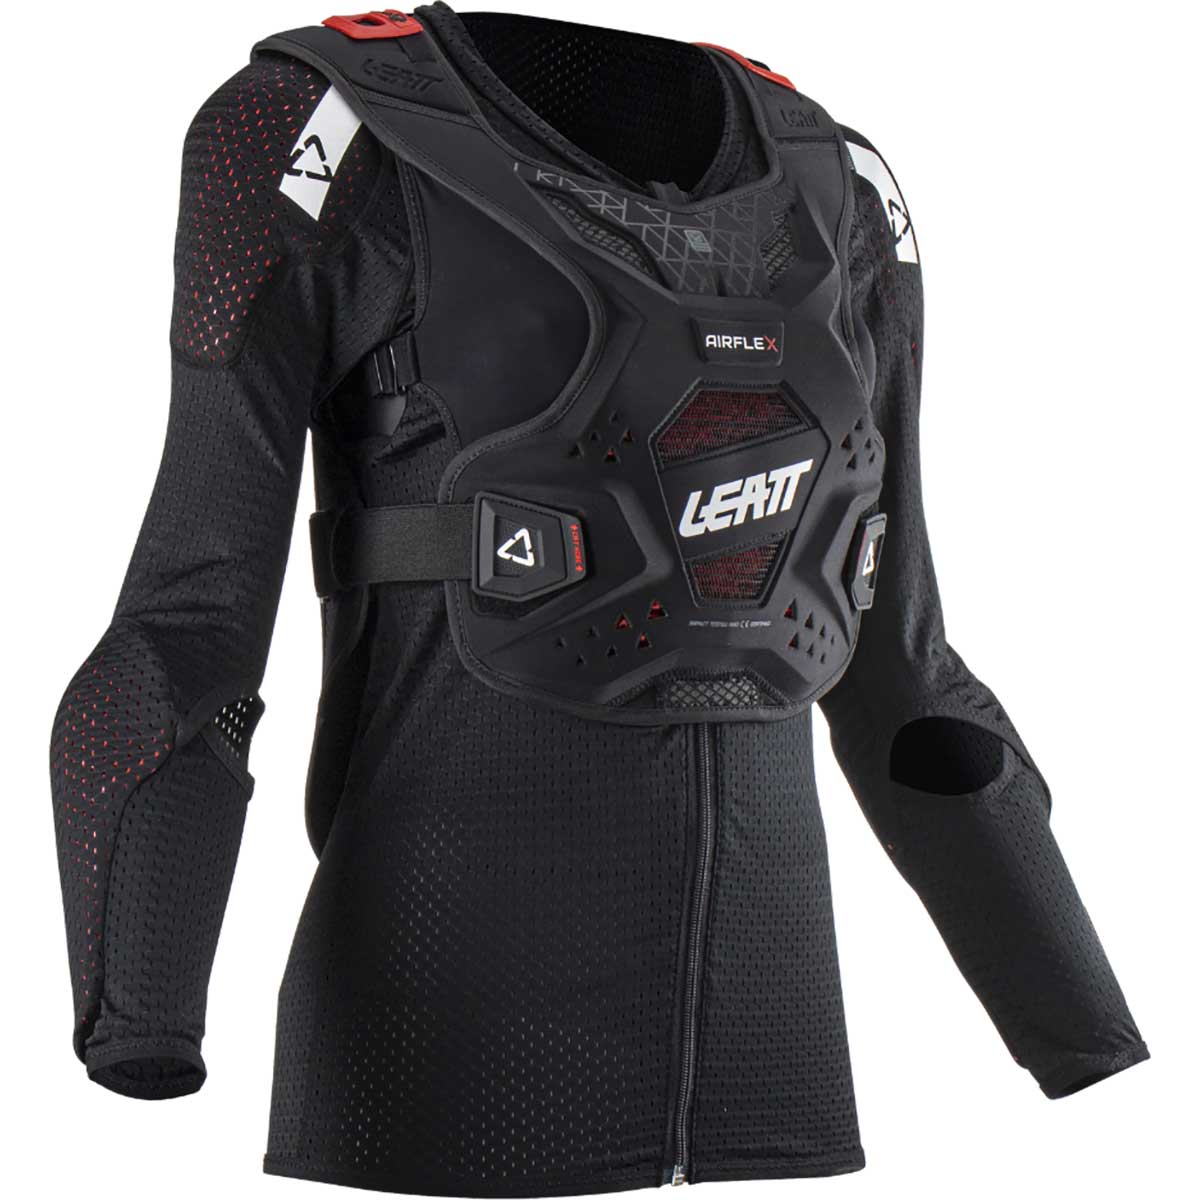 Leatt AirFlex Protector Women's Off-Road Body Armor-5022131180